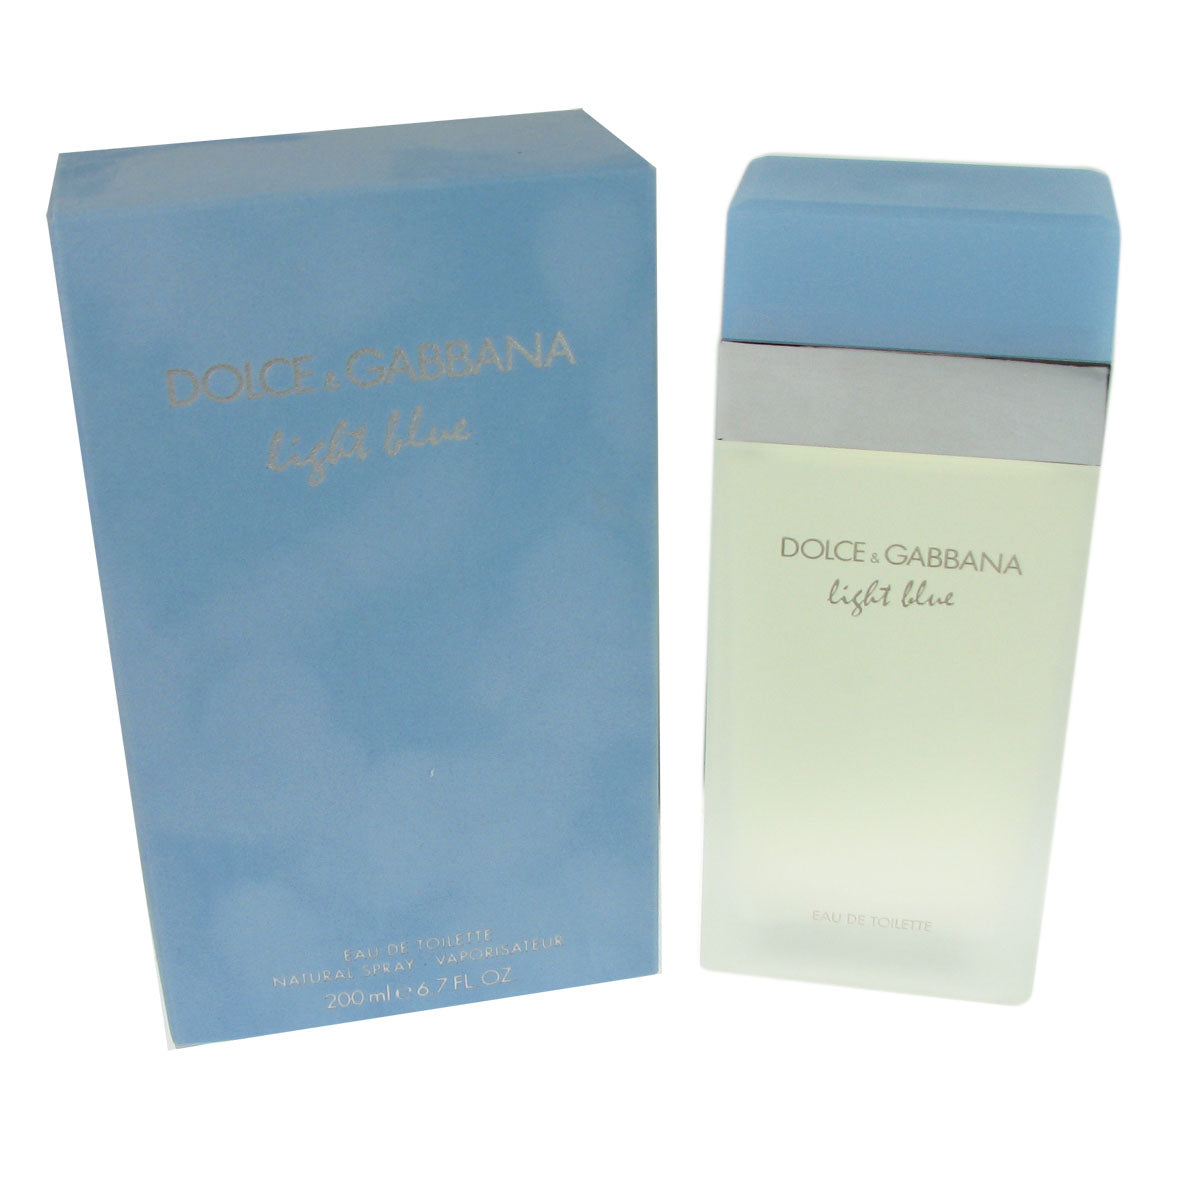 Dolce & Gabbana Light Blue for Women 6.7 oz Eau de Toilette Spray